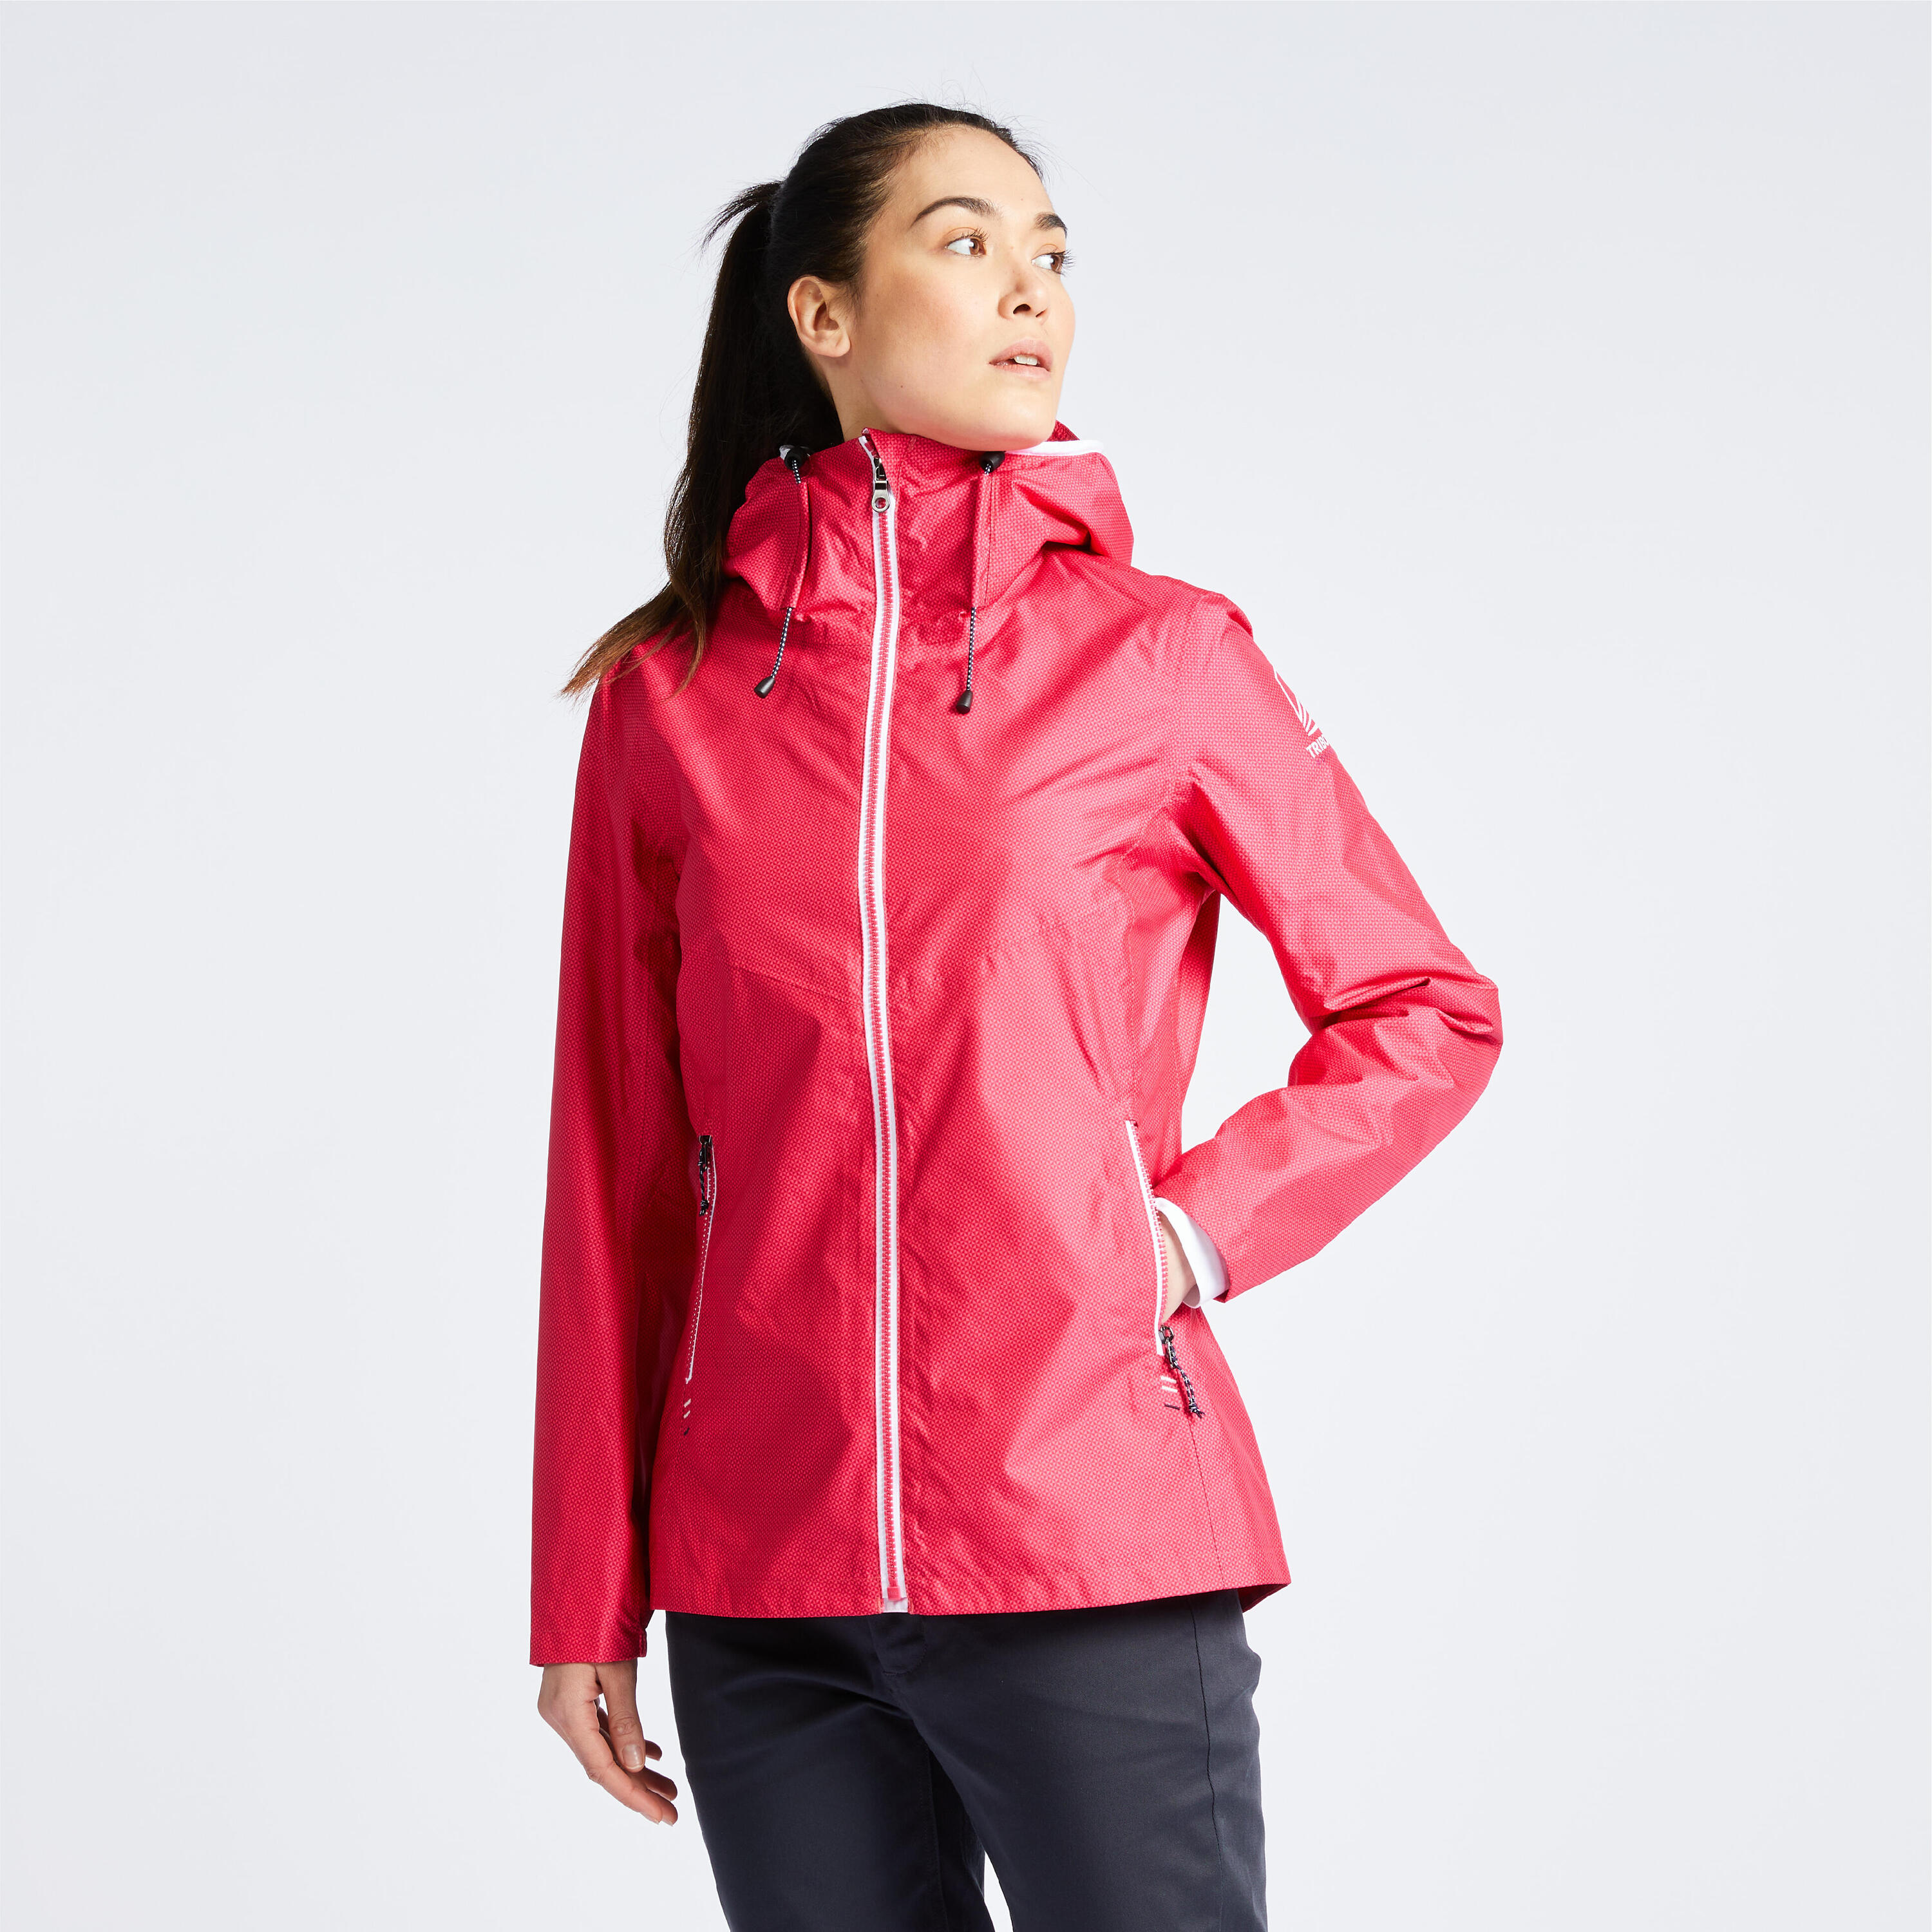 Women's waterproof sailing jacket 100 - All Over Pink 2/9